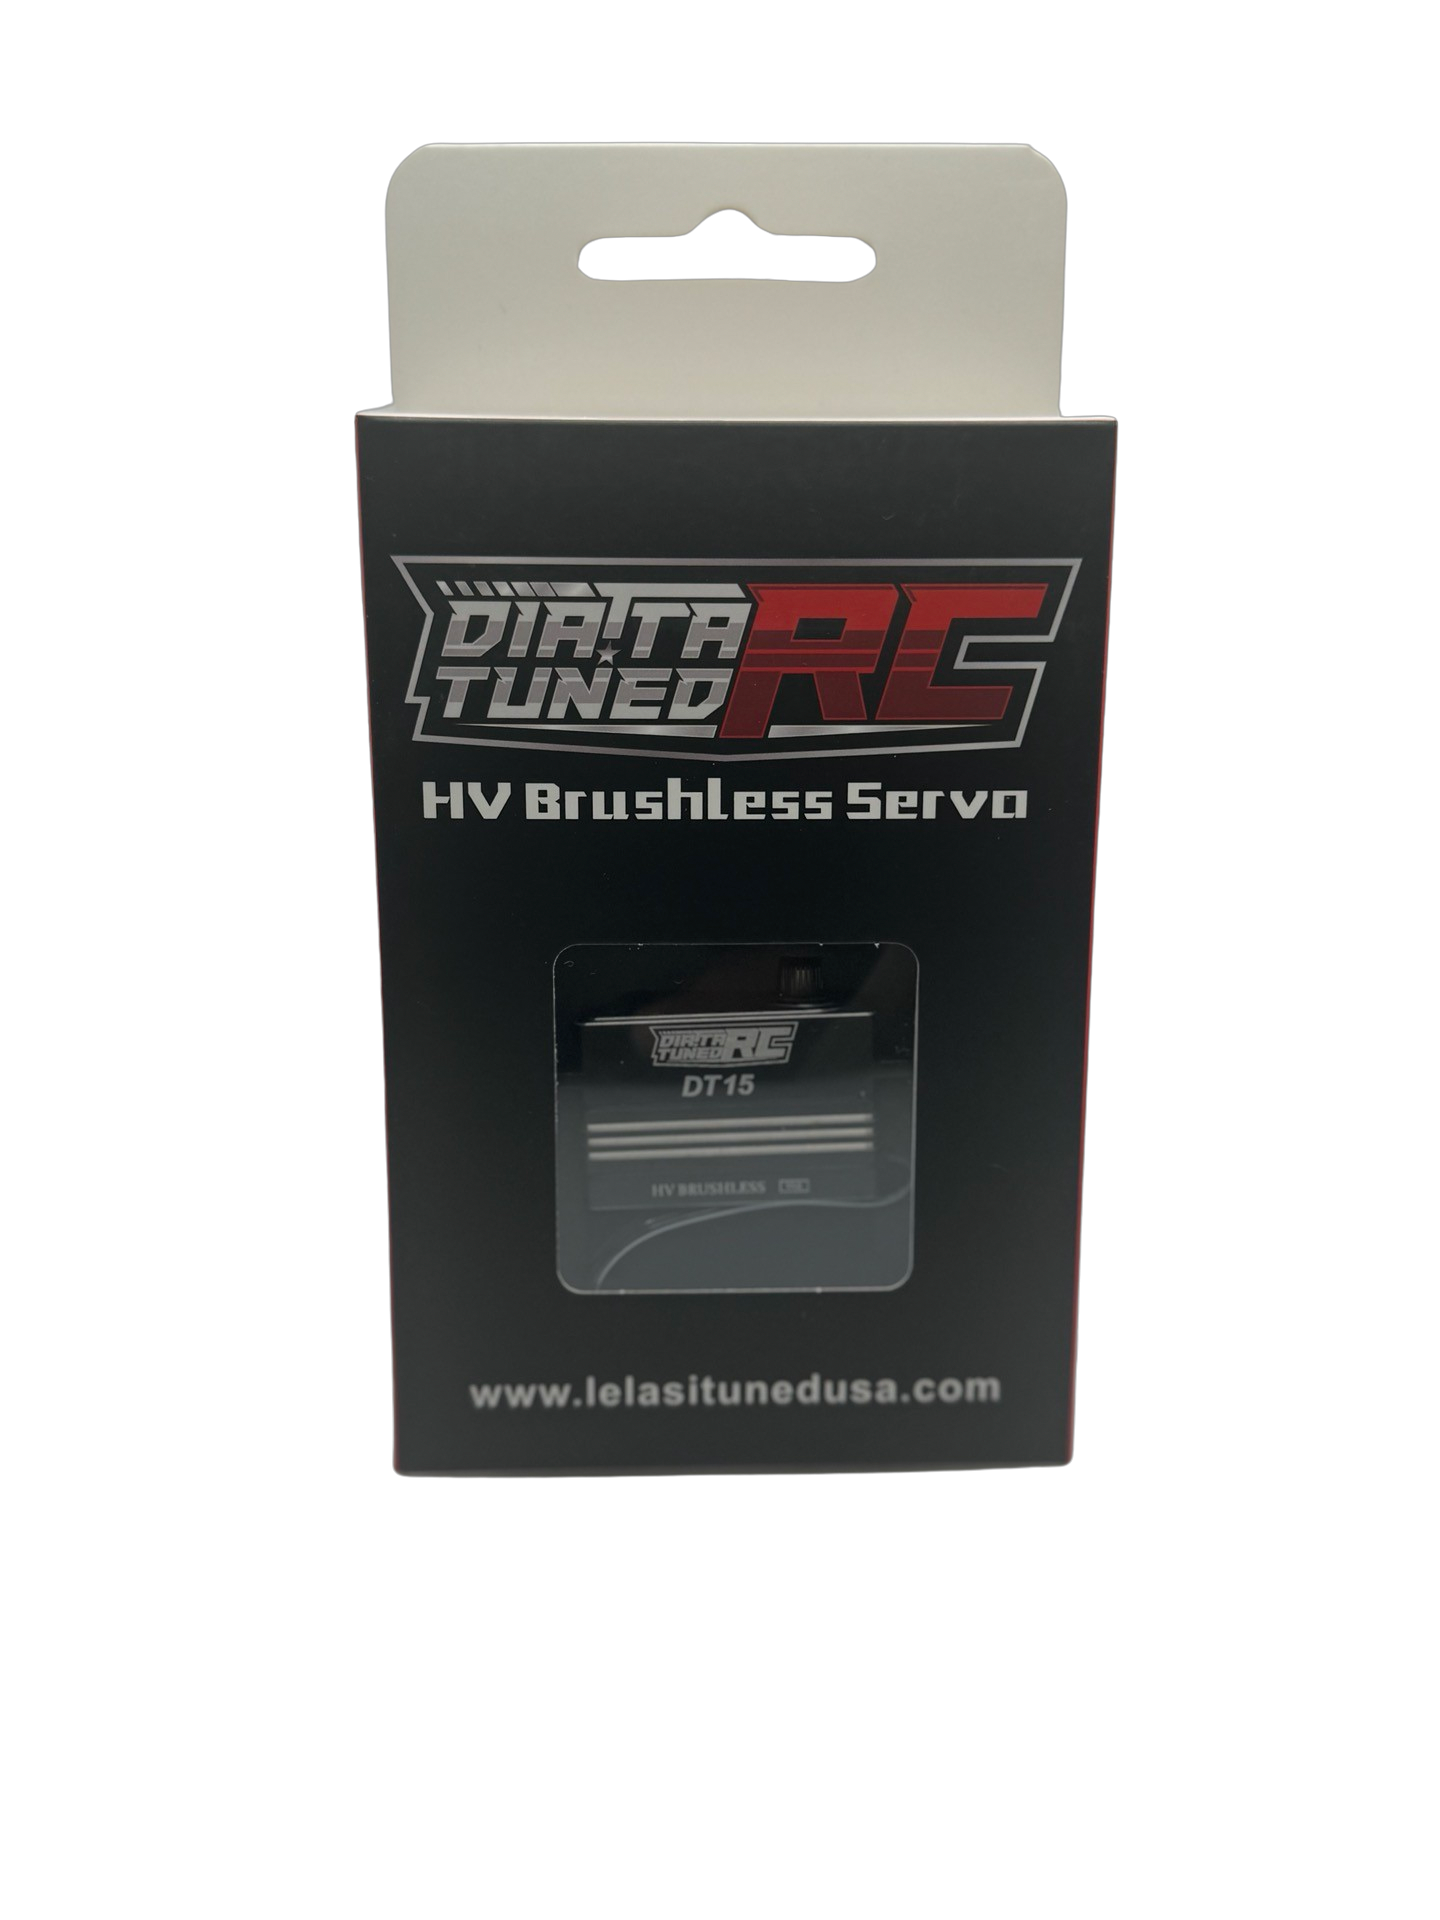 DT15 Brushless HV Low Profile Titanium & Steel Gear Digital Servo (Silver) DTRC